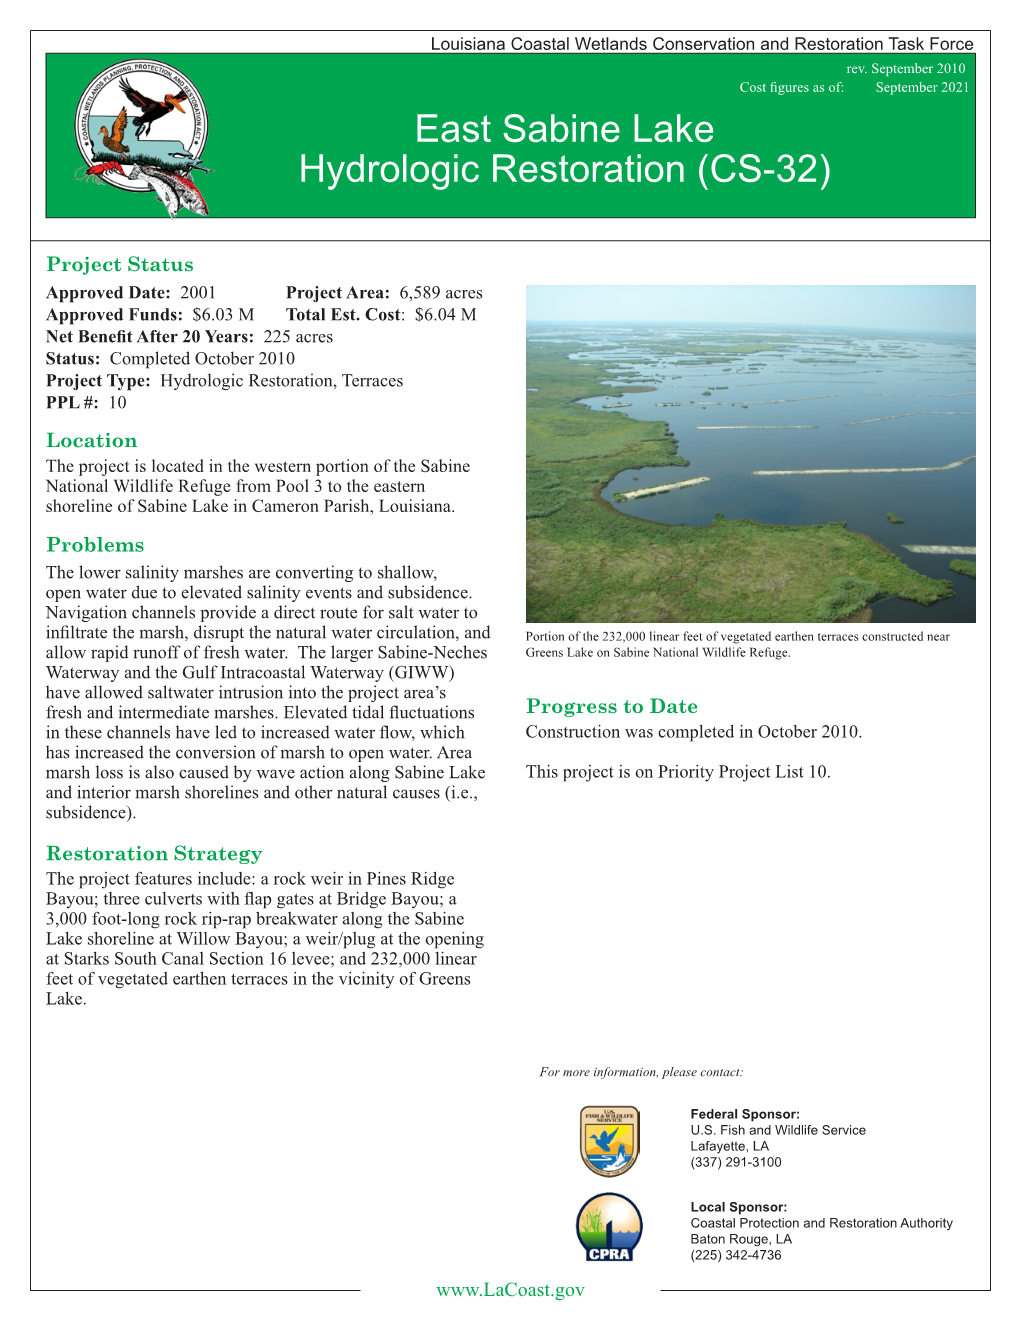 East Sabine Lake Hydrologic Restoration (CS-32)